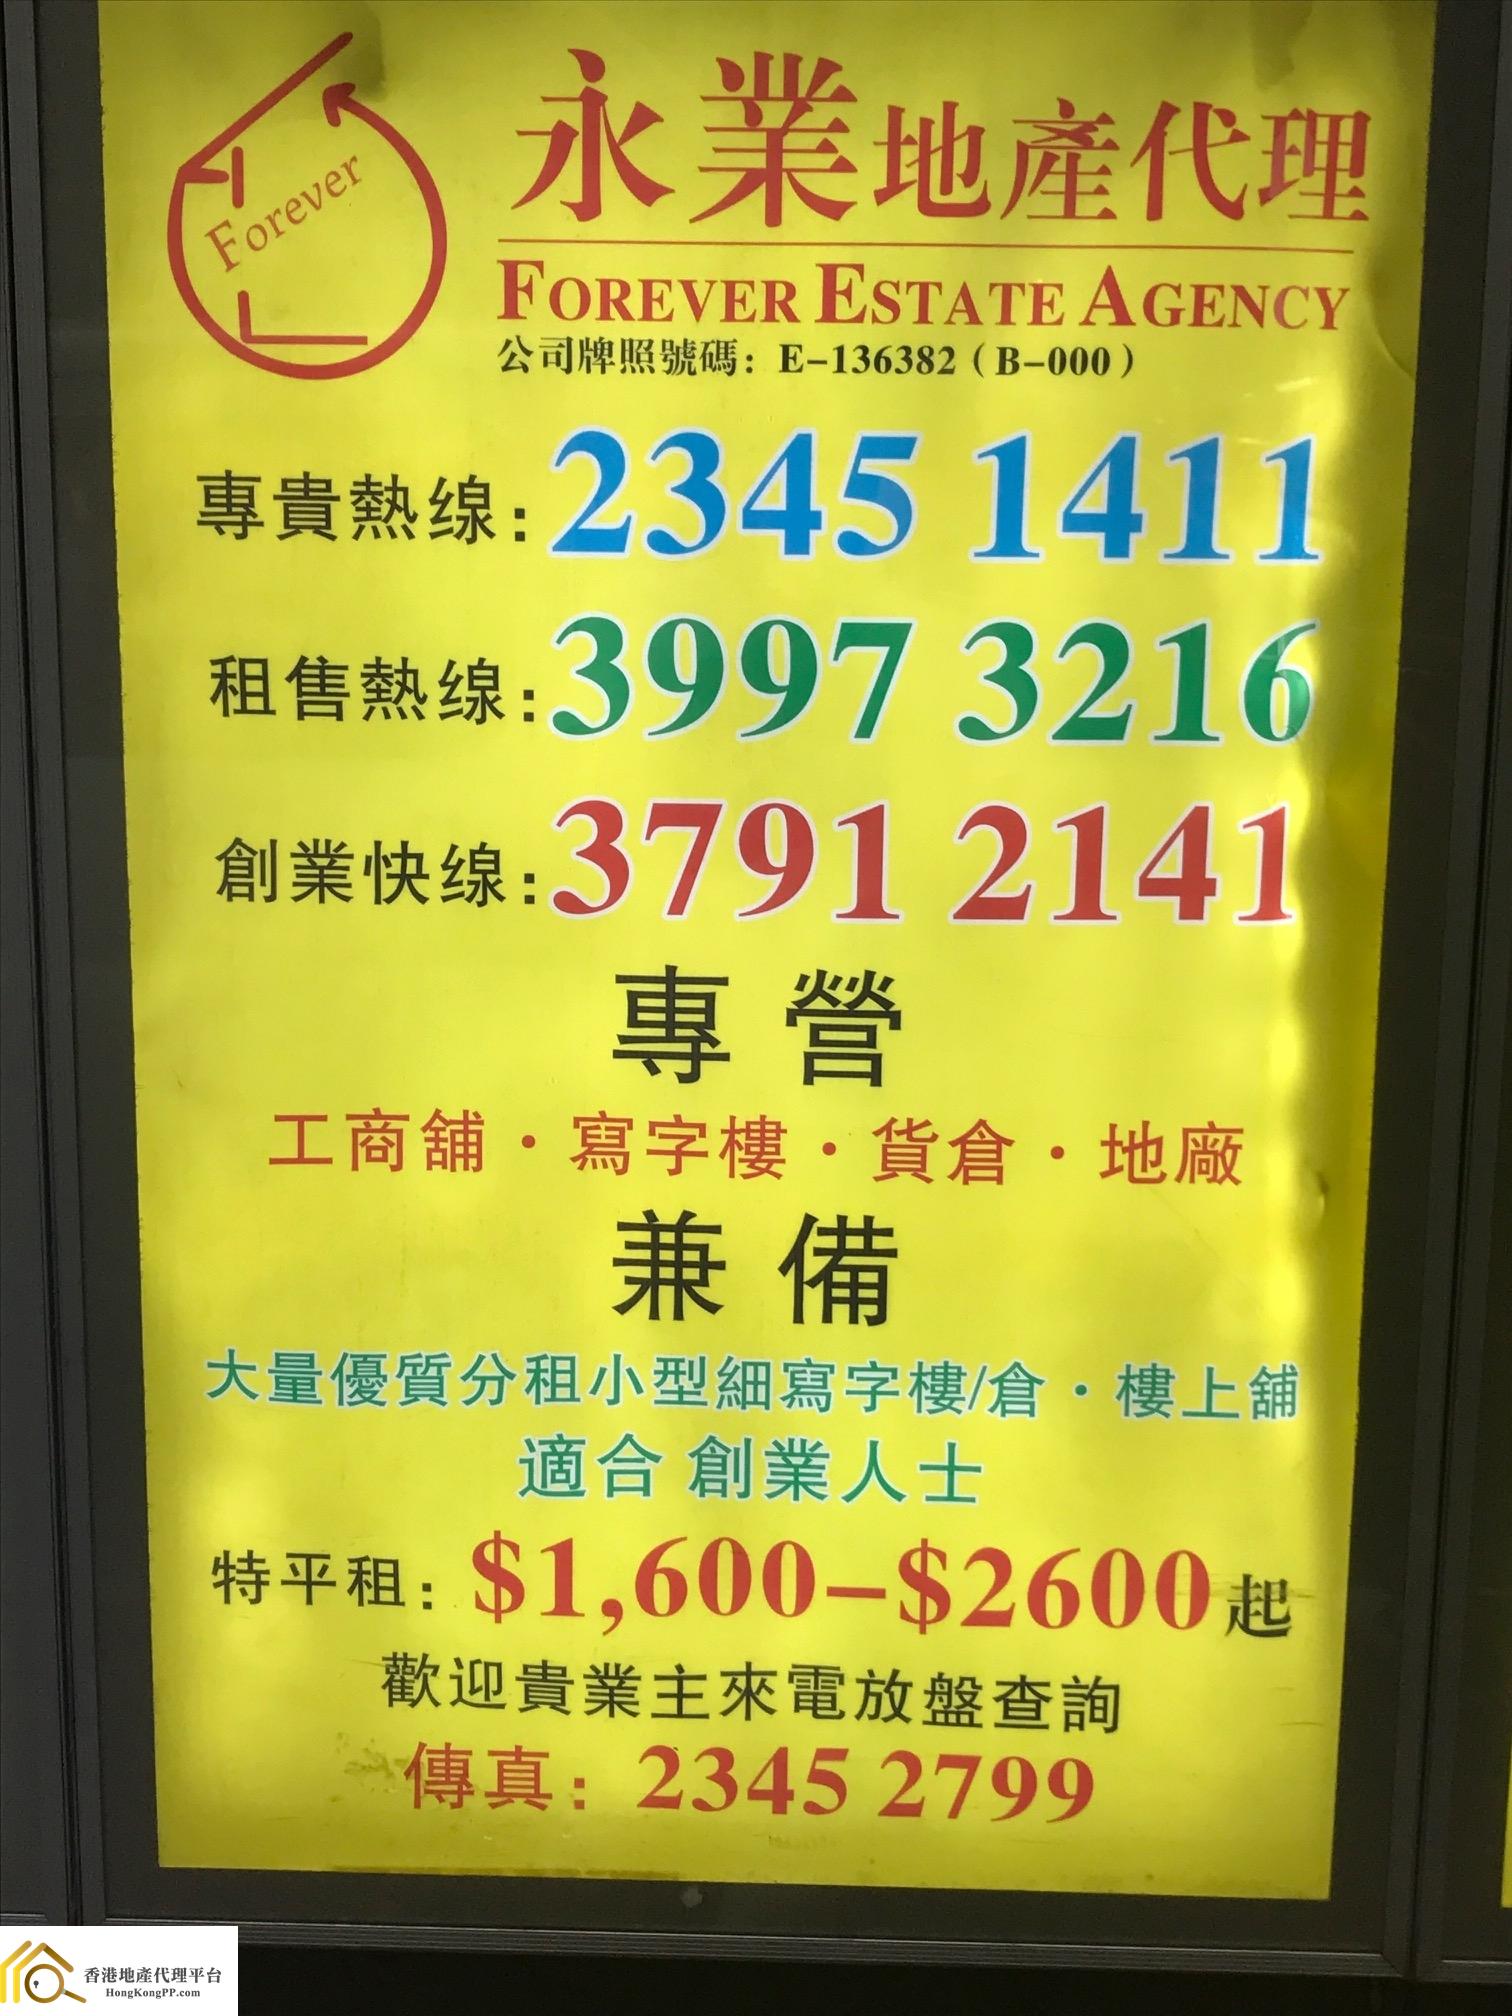 住宅地產代理: 永業地產代理 Forever Estate Agency 